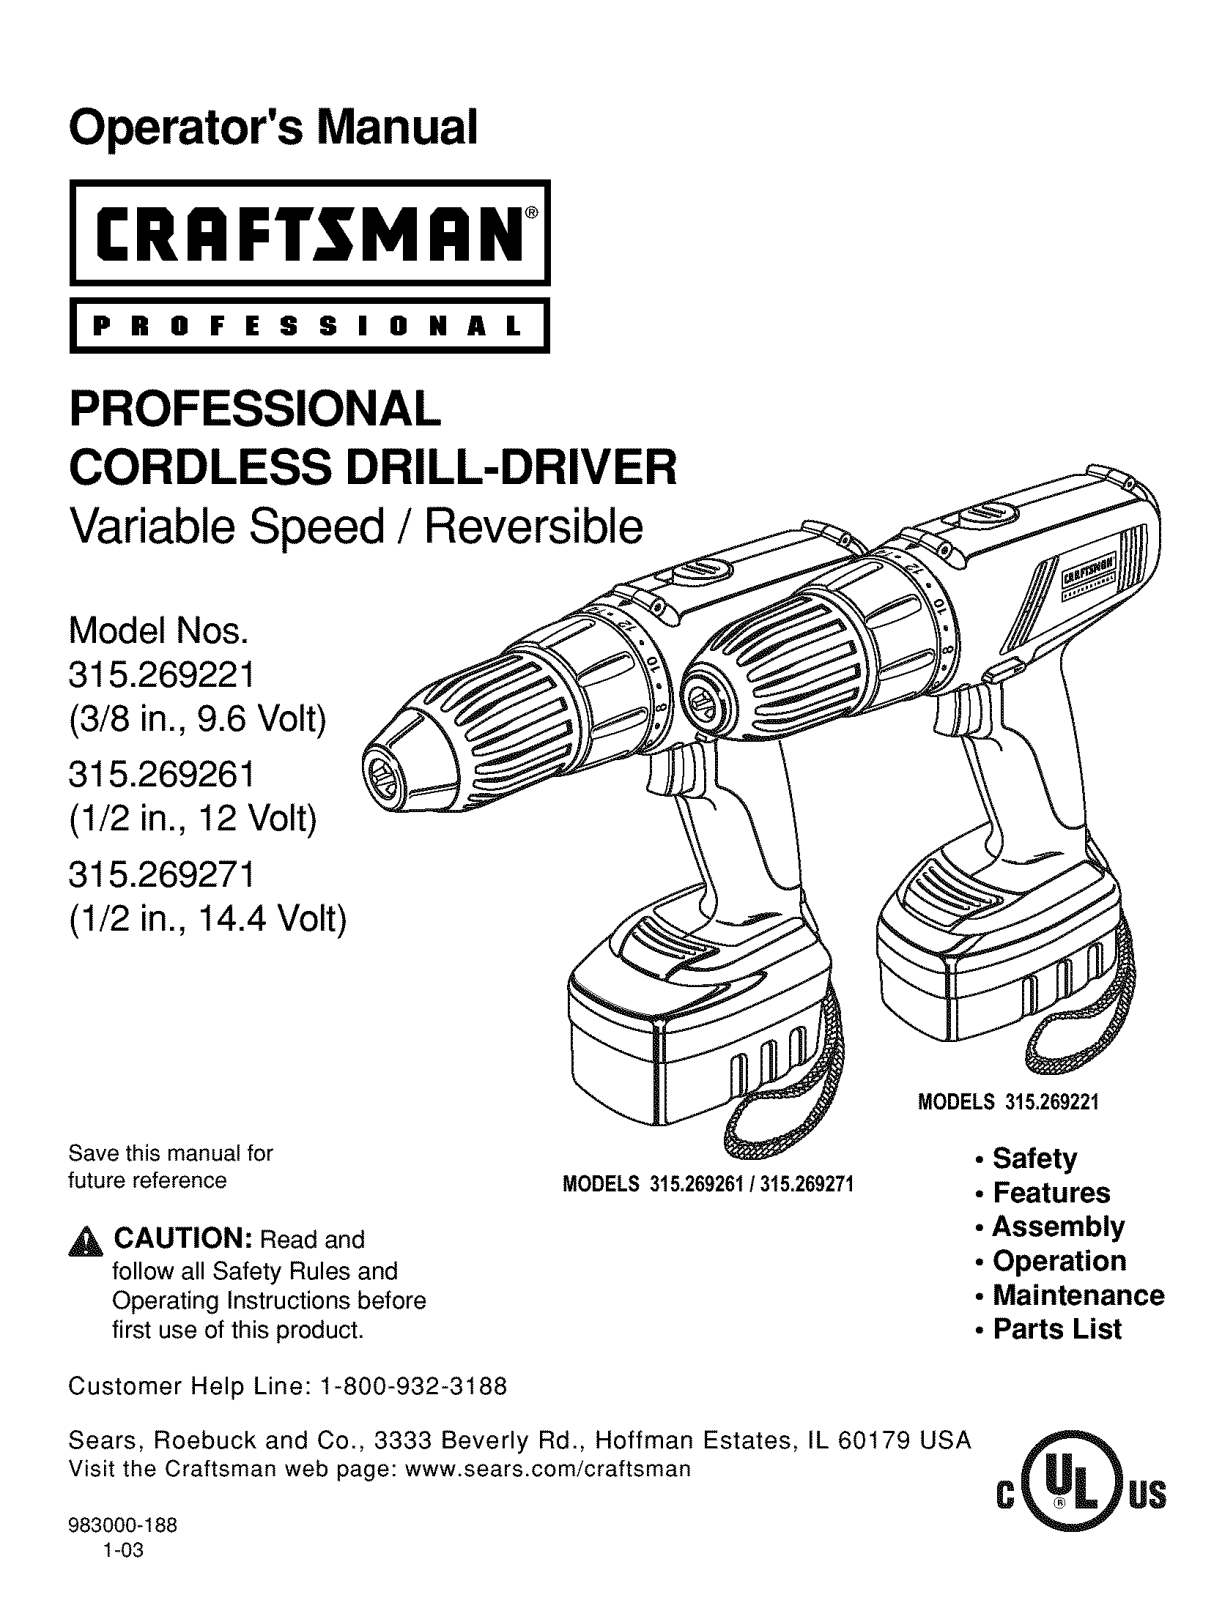 Craftsman 315269221, 315269261, 315269271 Owner’s Manual